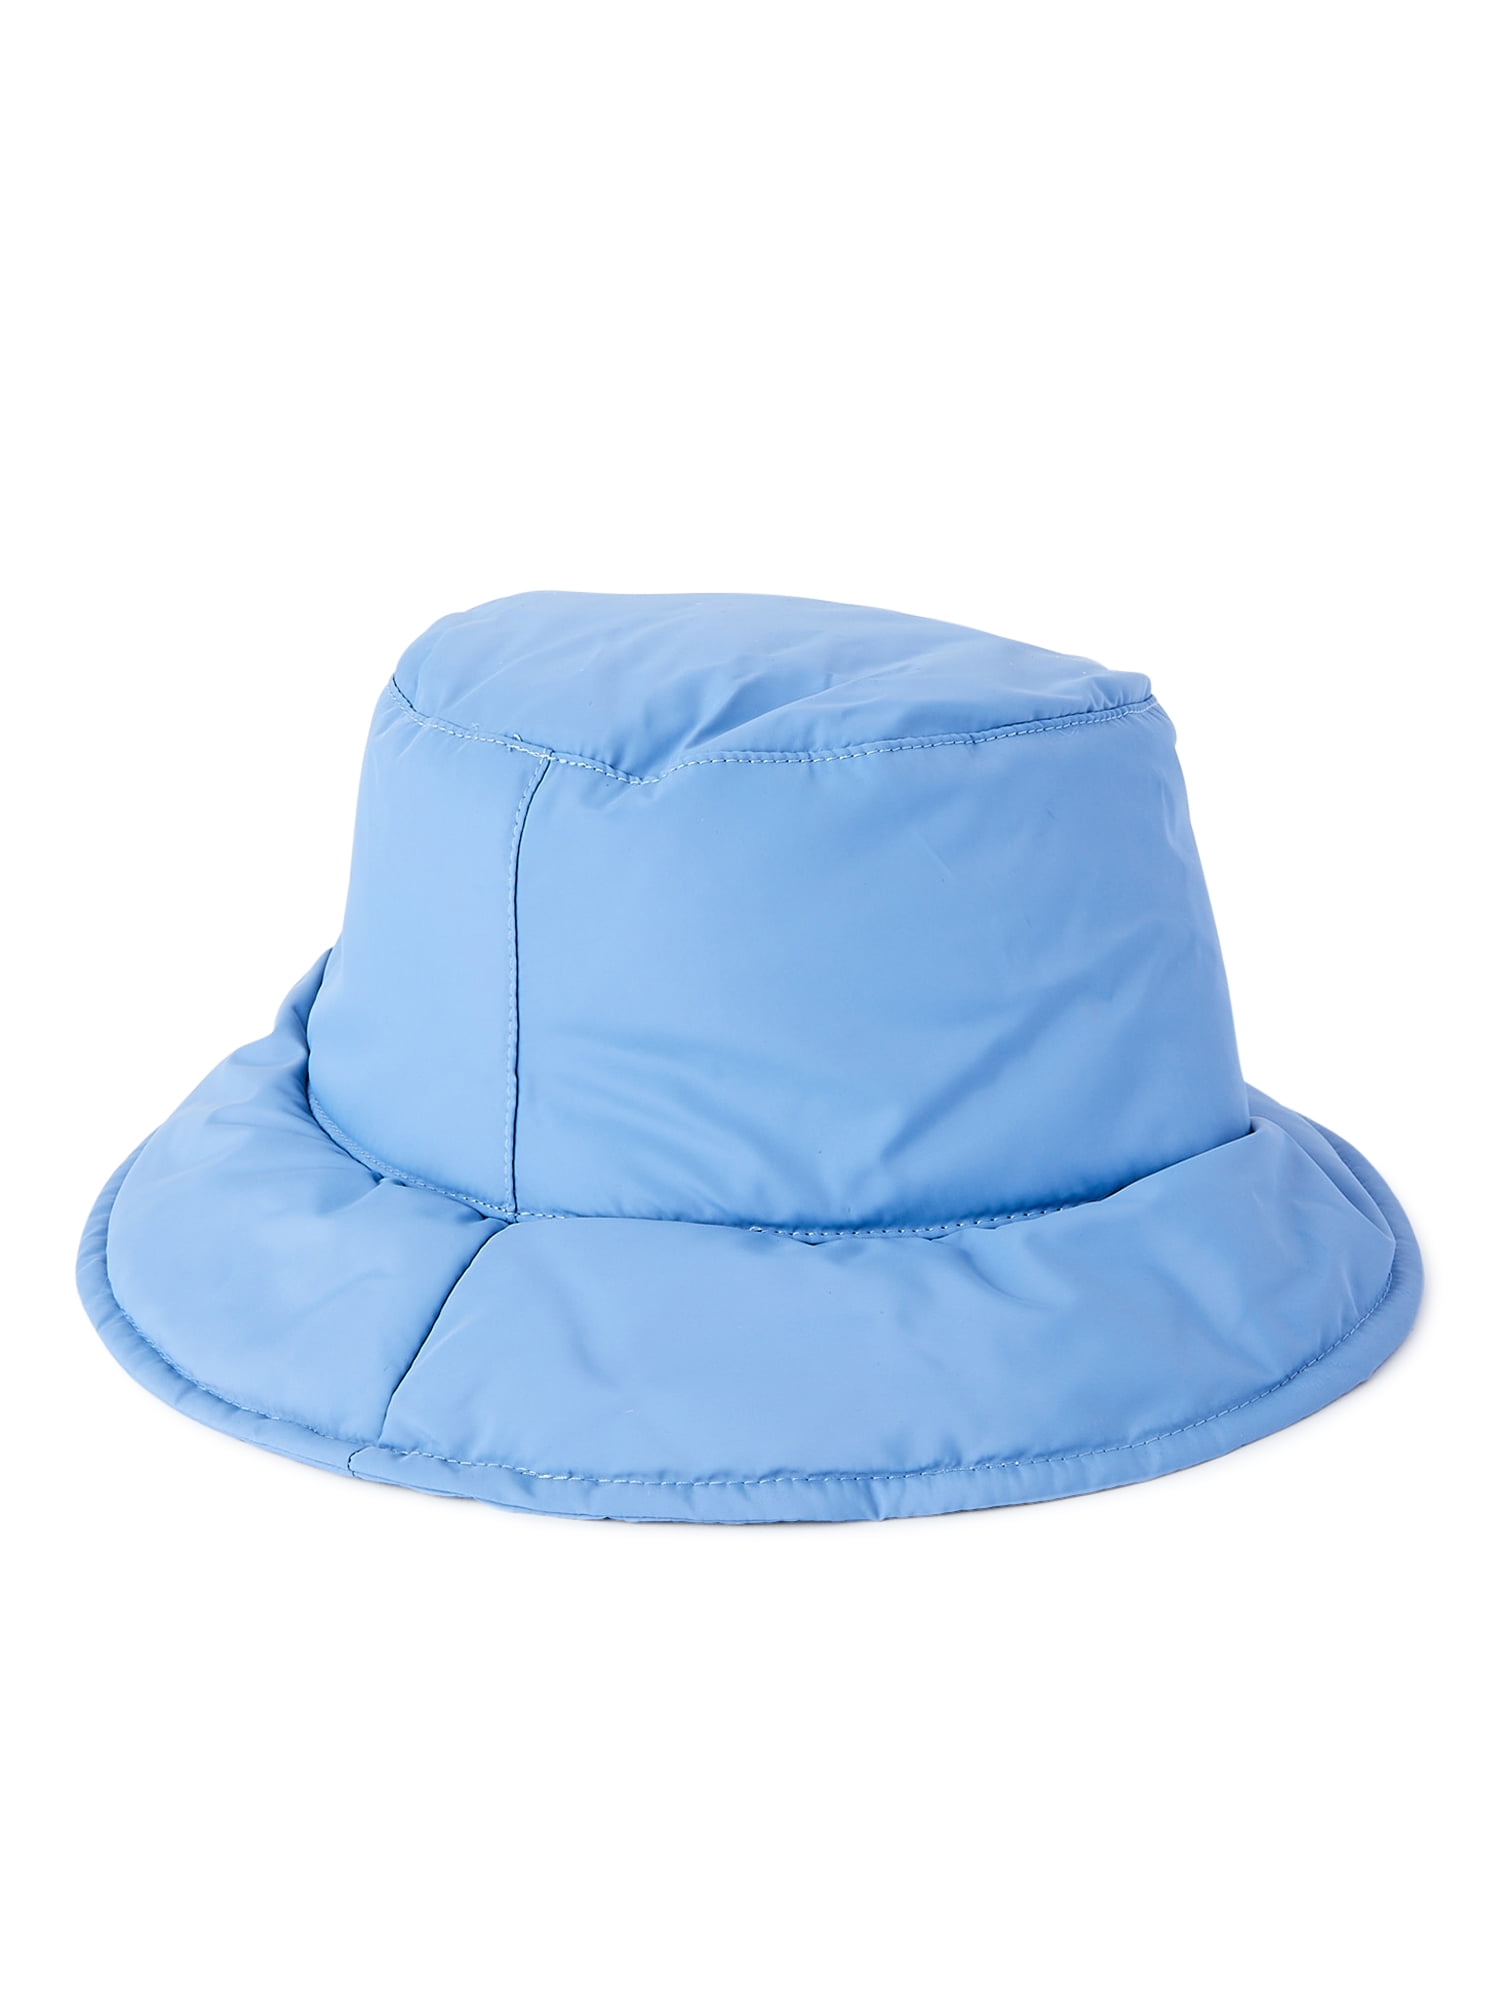 Steve Madden Satin Lined Bucket Hat-Powder Blue